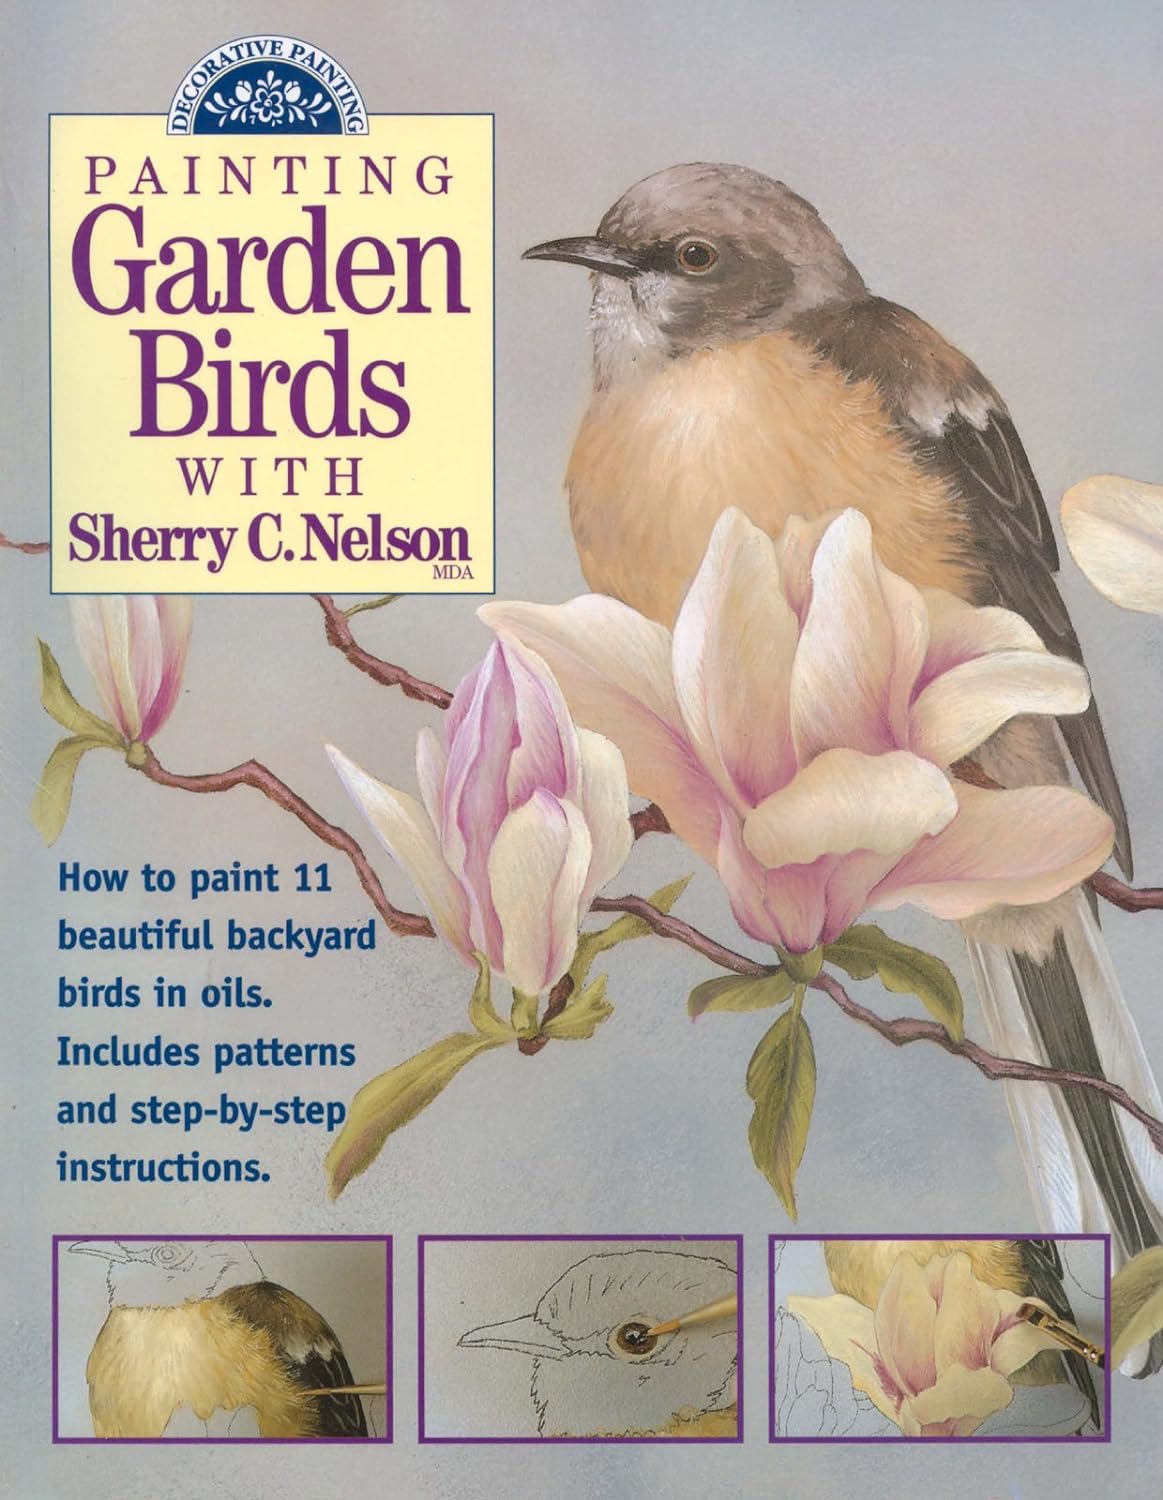 Painting Garden Birds - Sherry C.Nelson